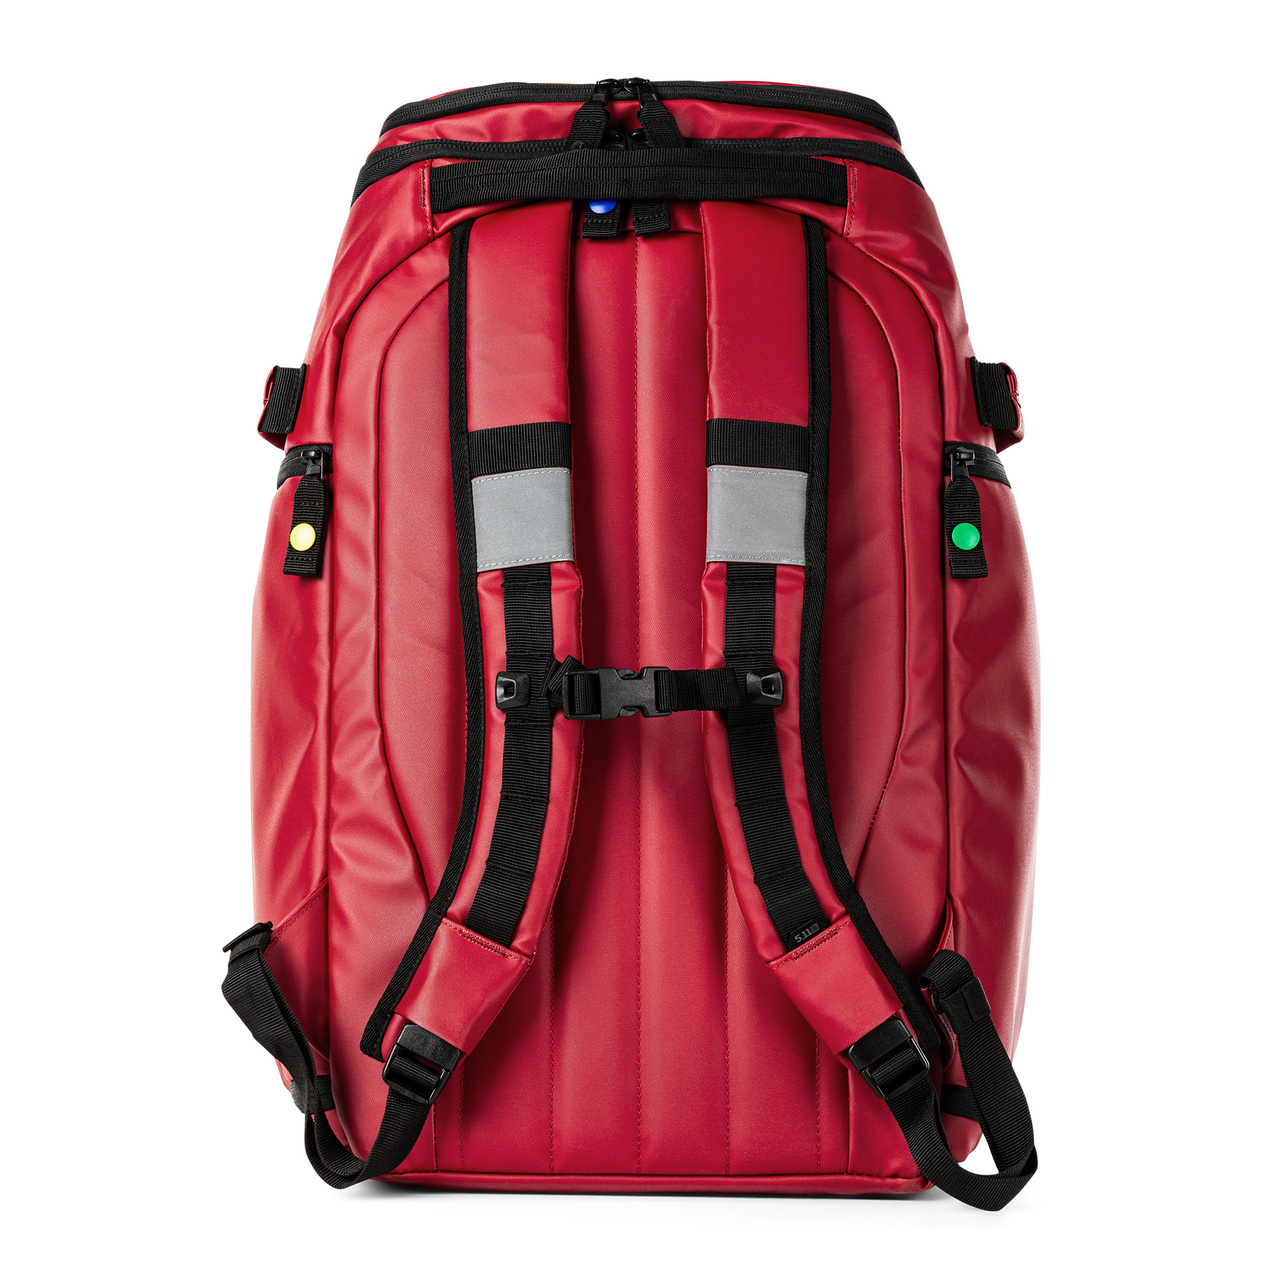 Responder 72 Backpack Fire Red